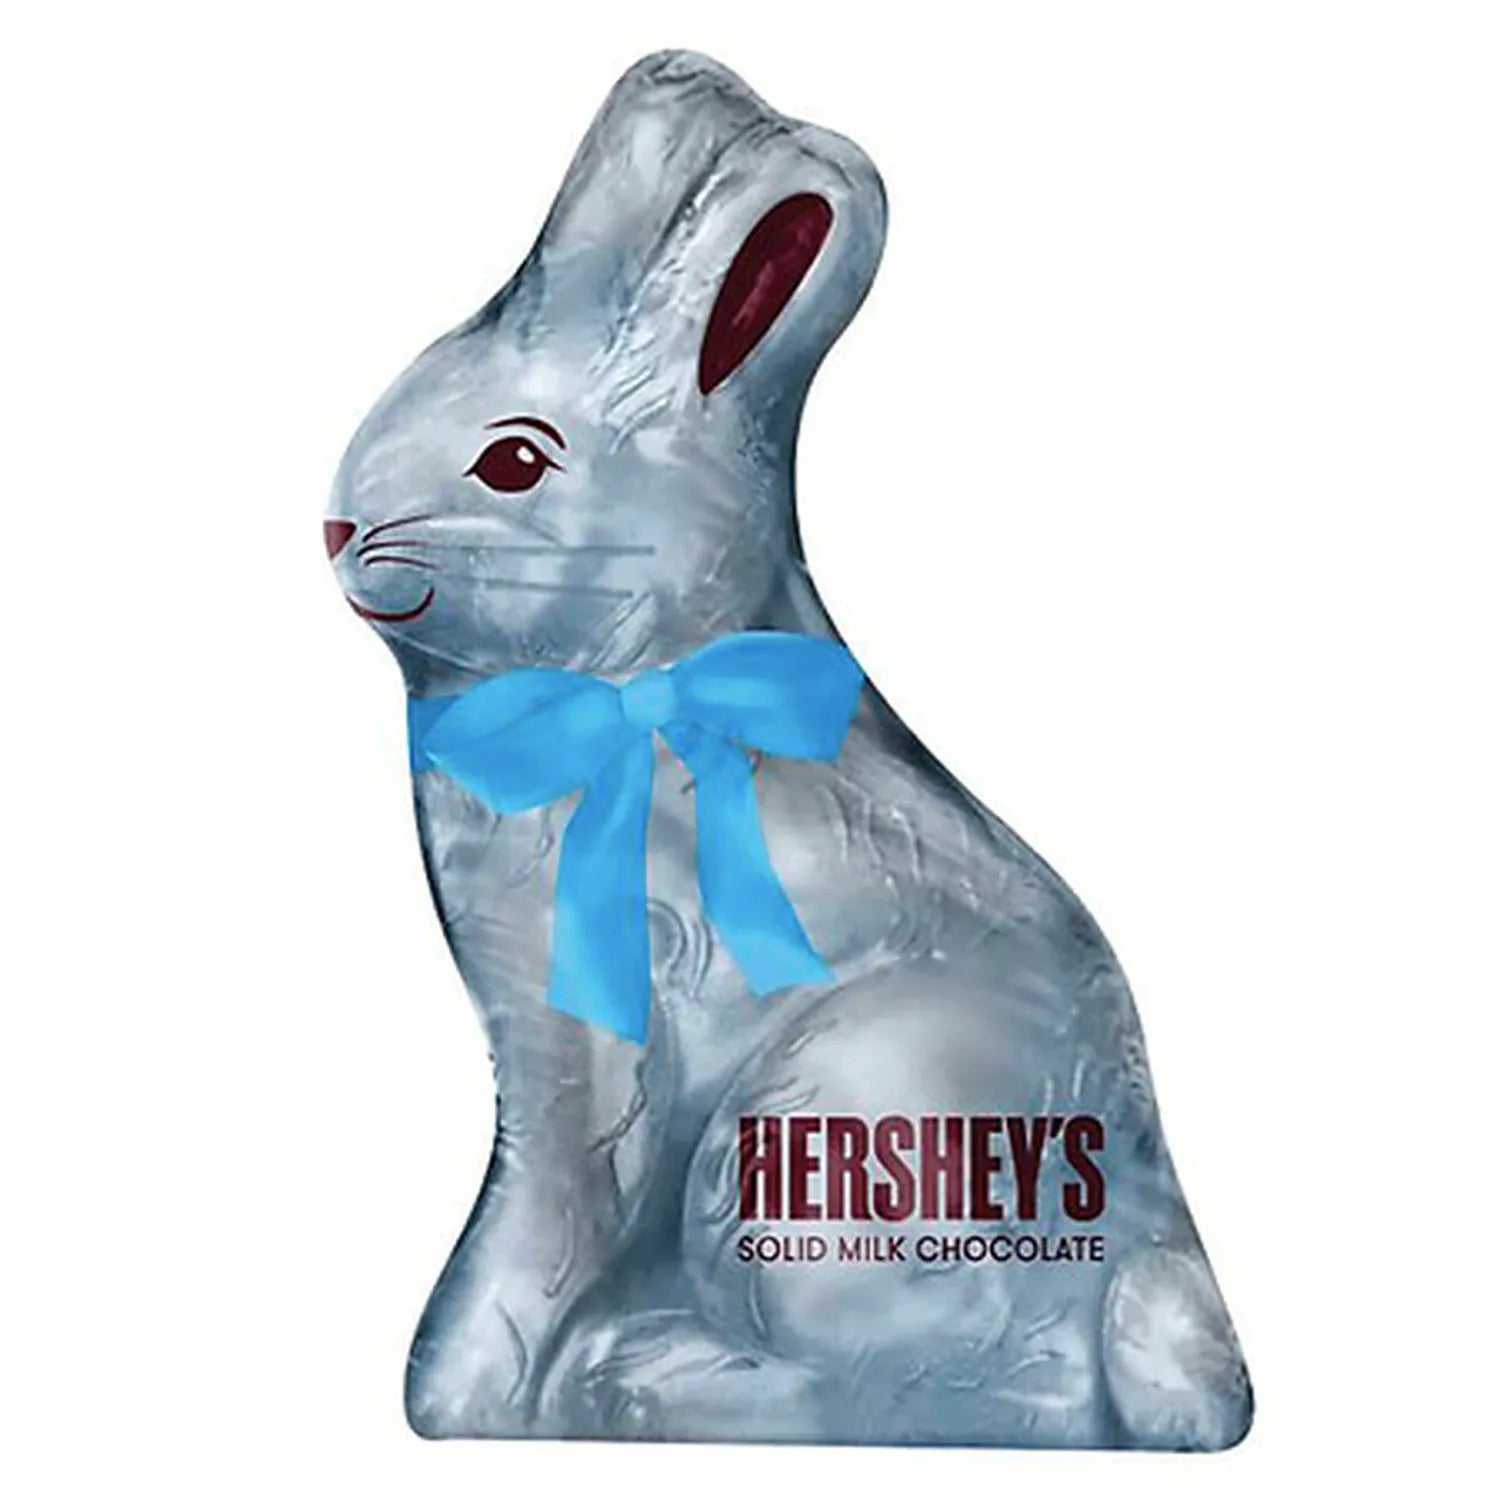 Hershey's Solid Gold Milk Chocolate Bunny (USA)